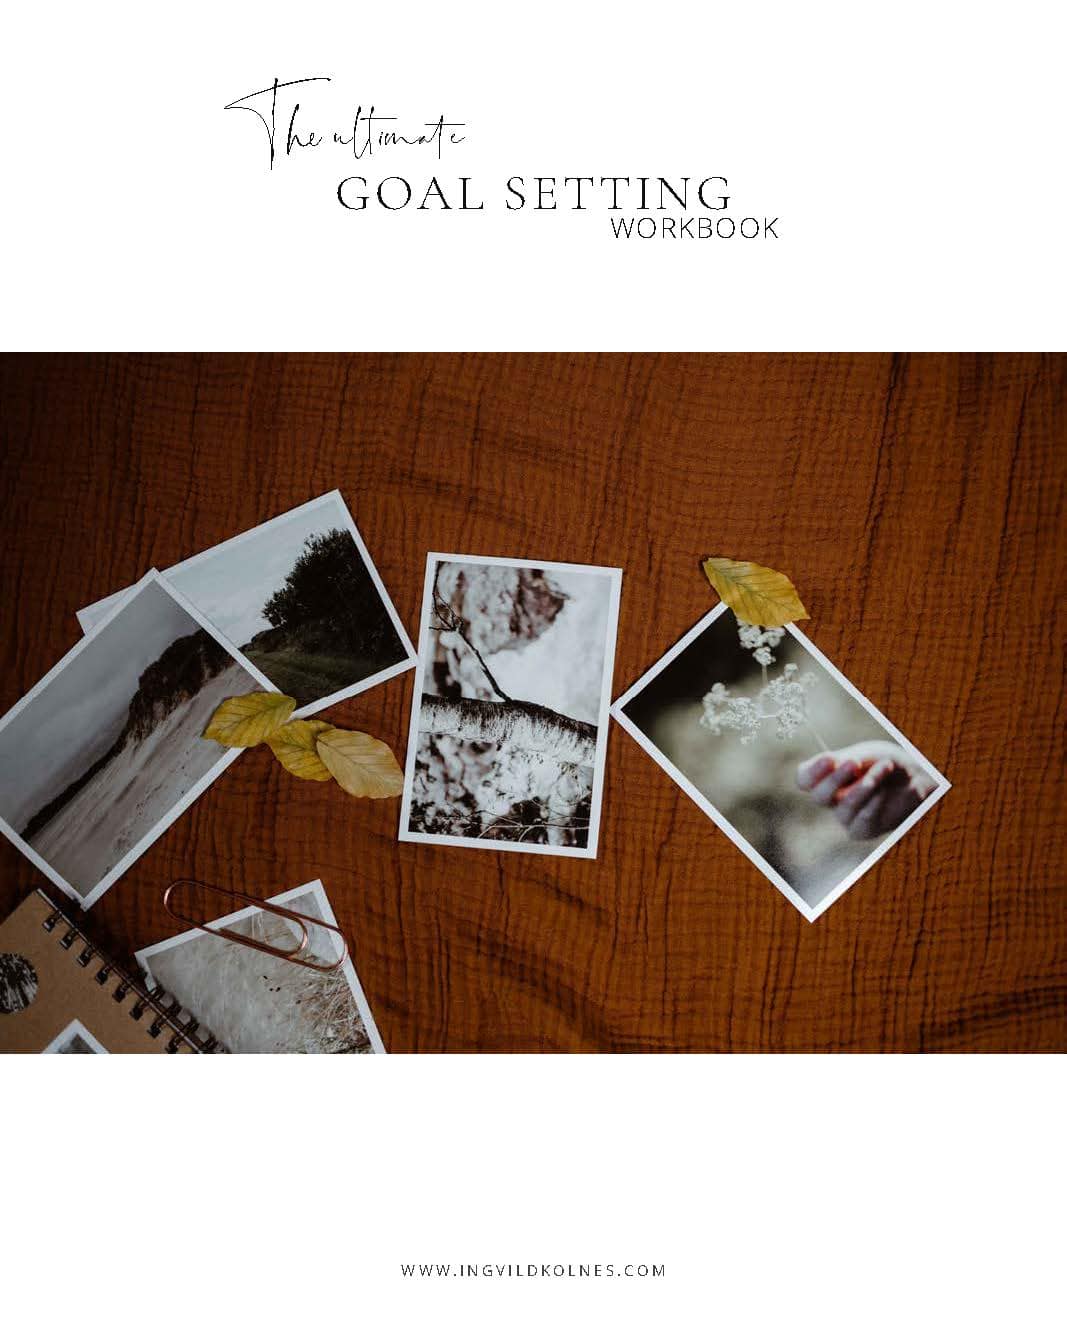 Goalsetting workbook _ by Ingvild Kolnes_Side_1